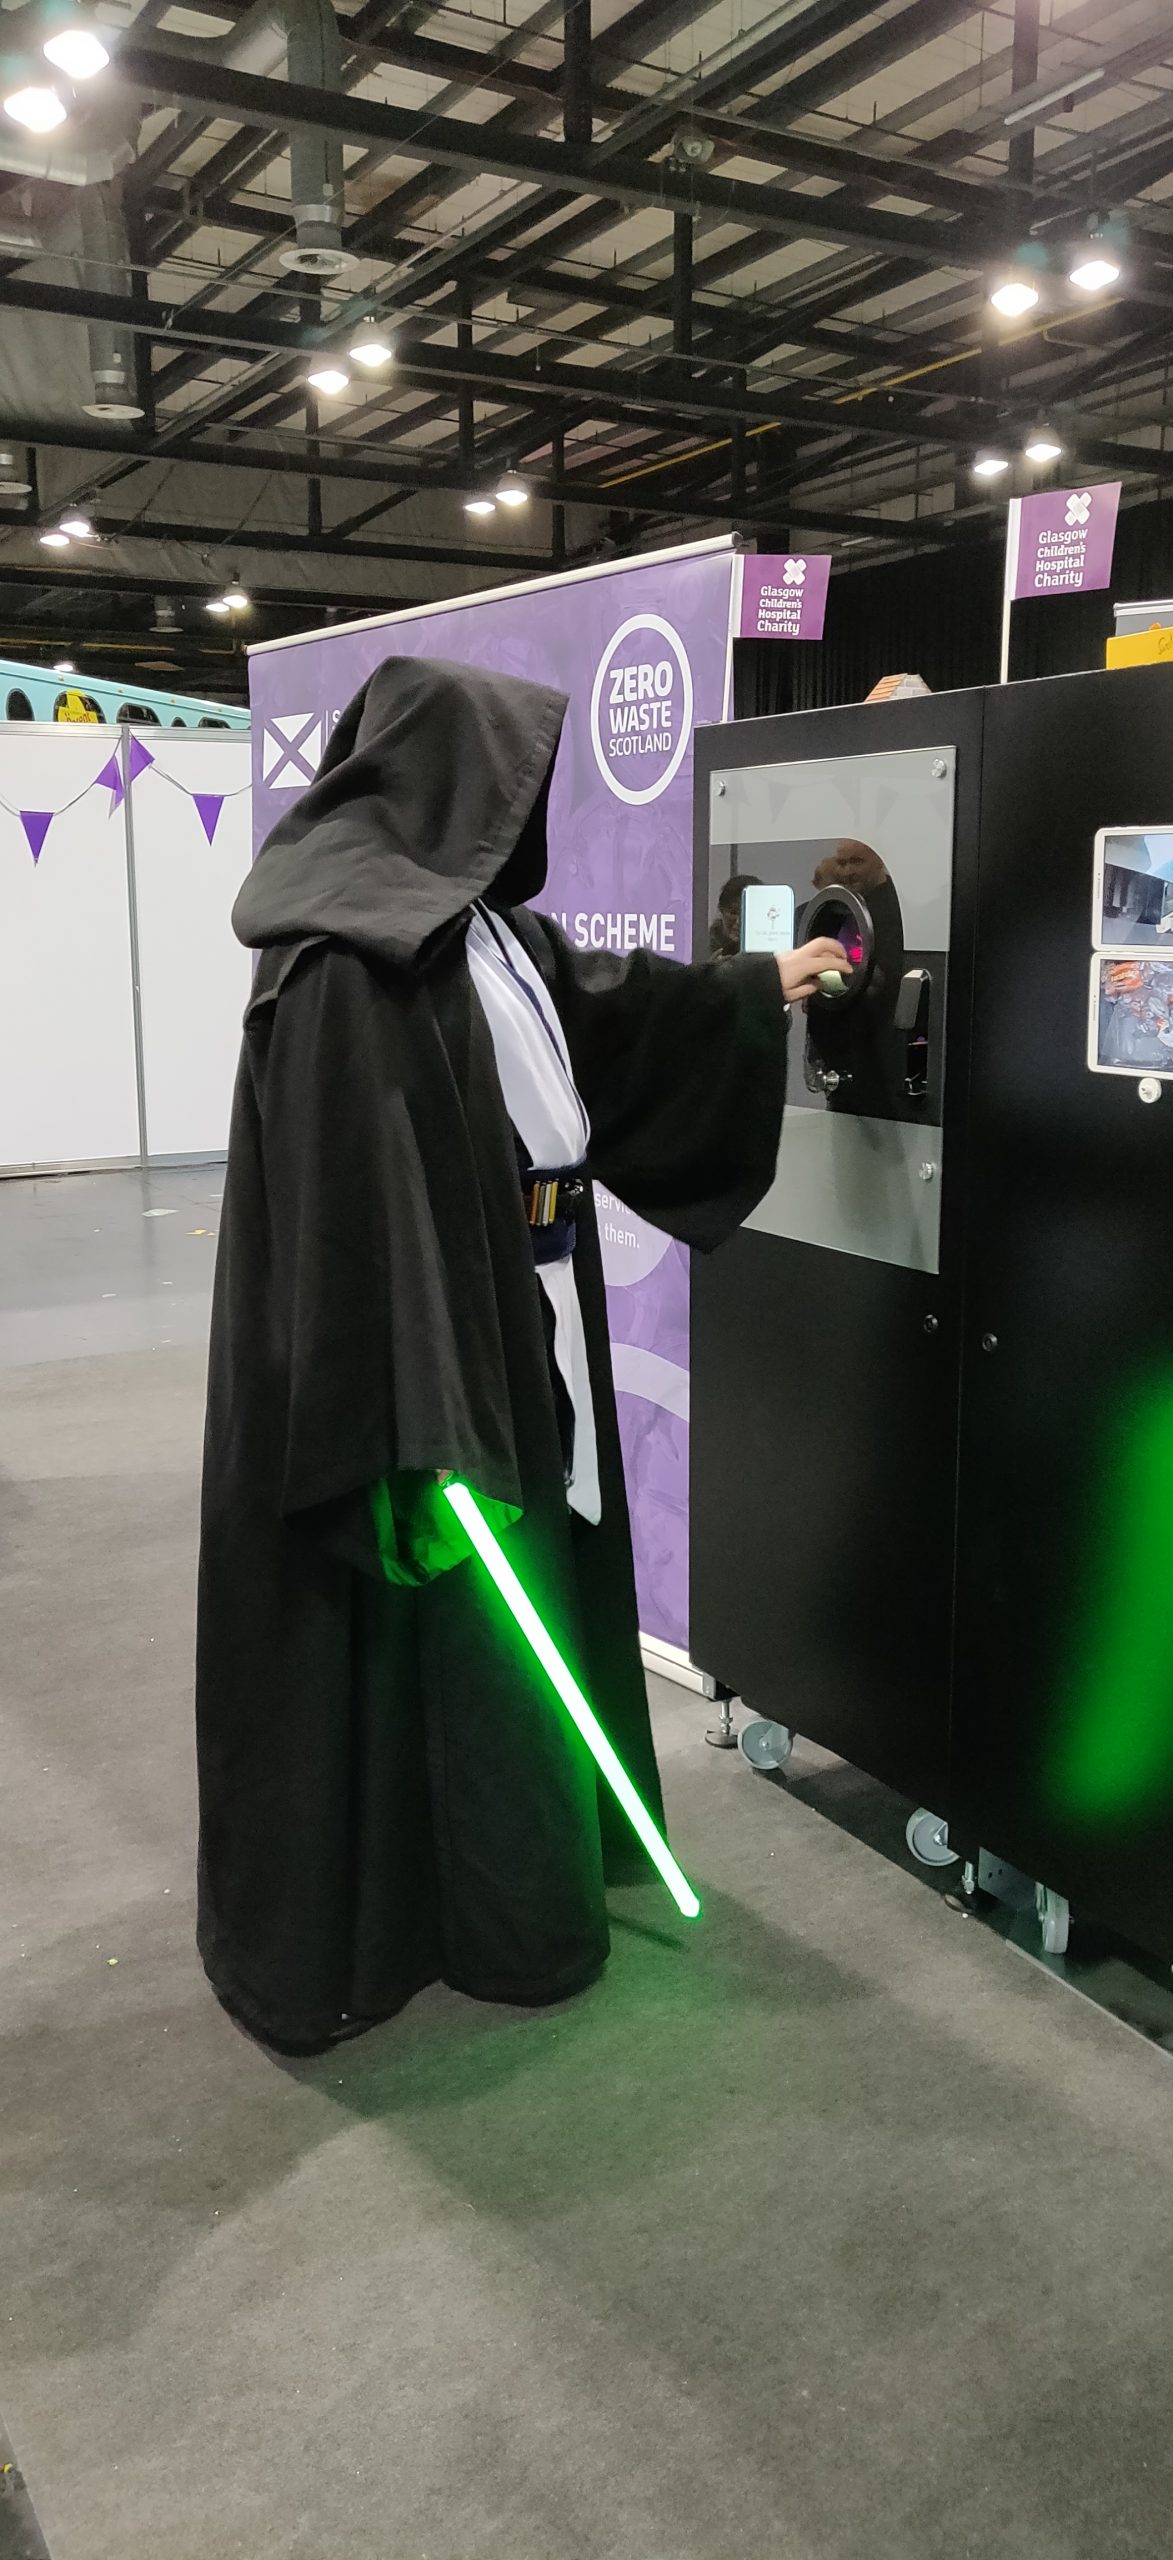 Obi Wan Kenobi using the Reverse Vending at Zero Waste Scotland Stand